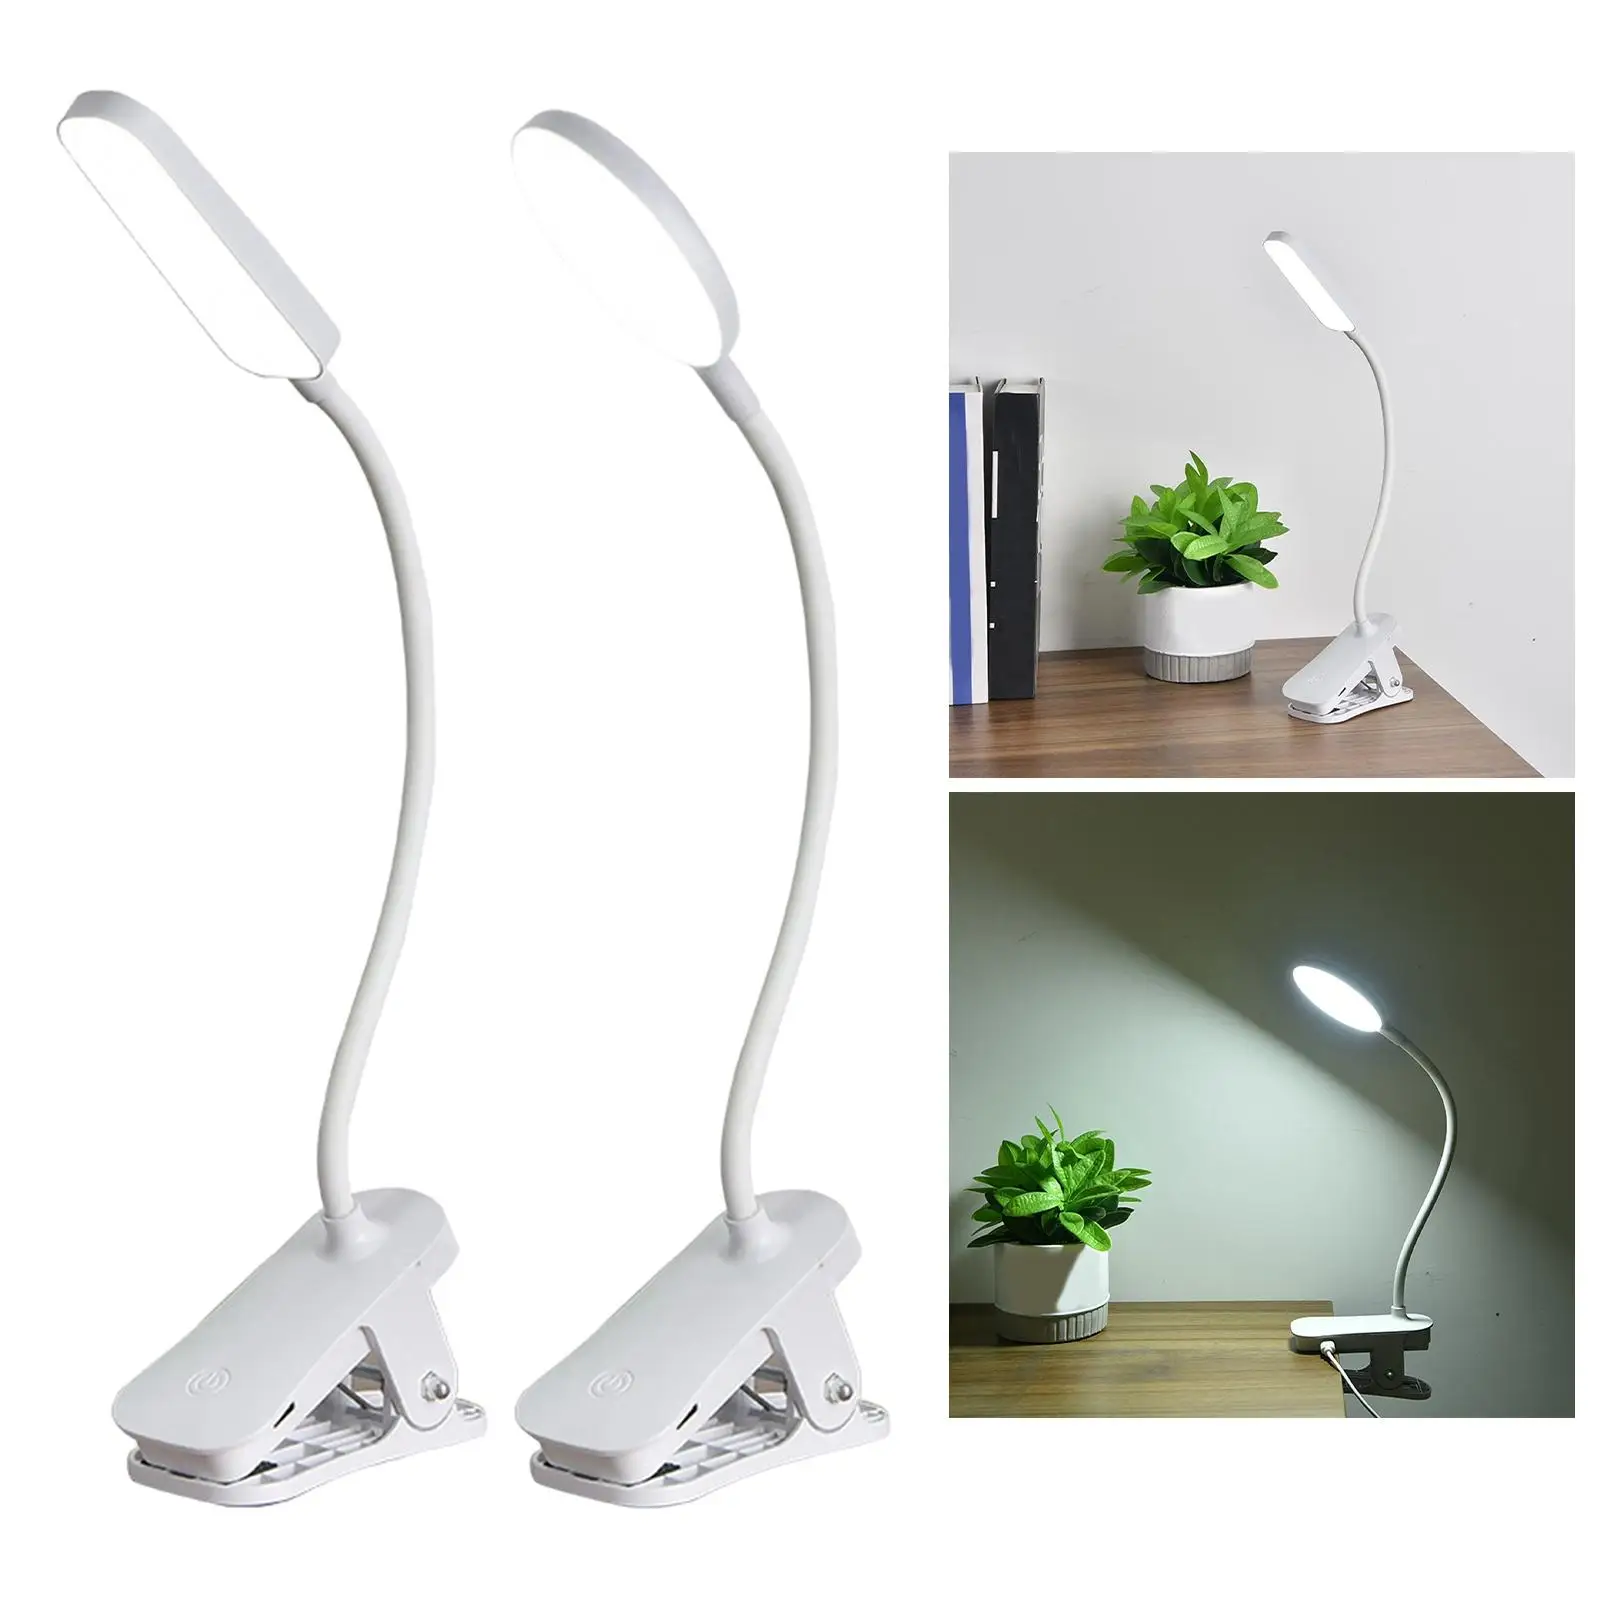 Flexible Gooseneck LED Clip On Table Light Lighting USB 3 Modes Table Lamp Nightlight for Piano Office Bedroom Study Home